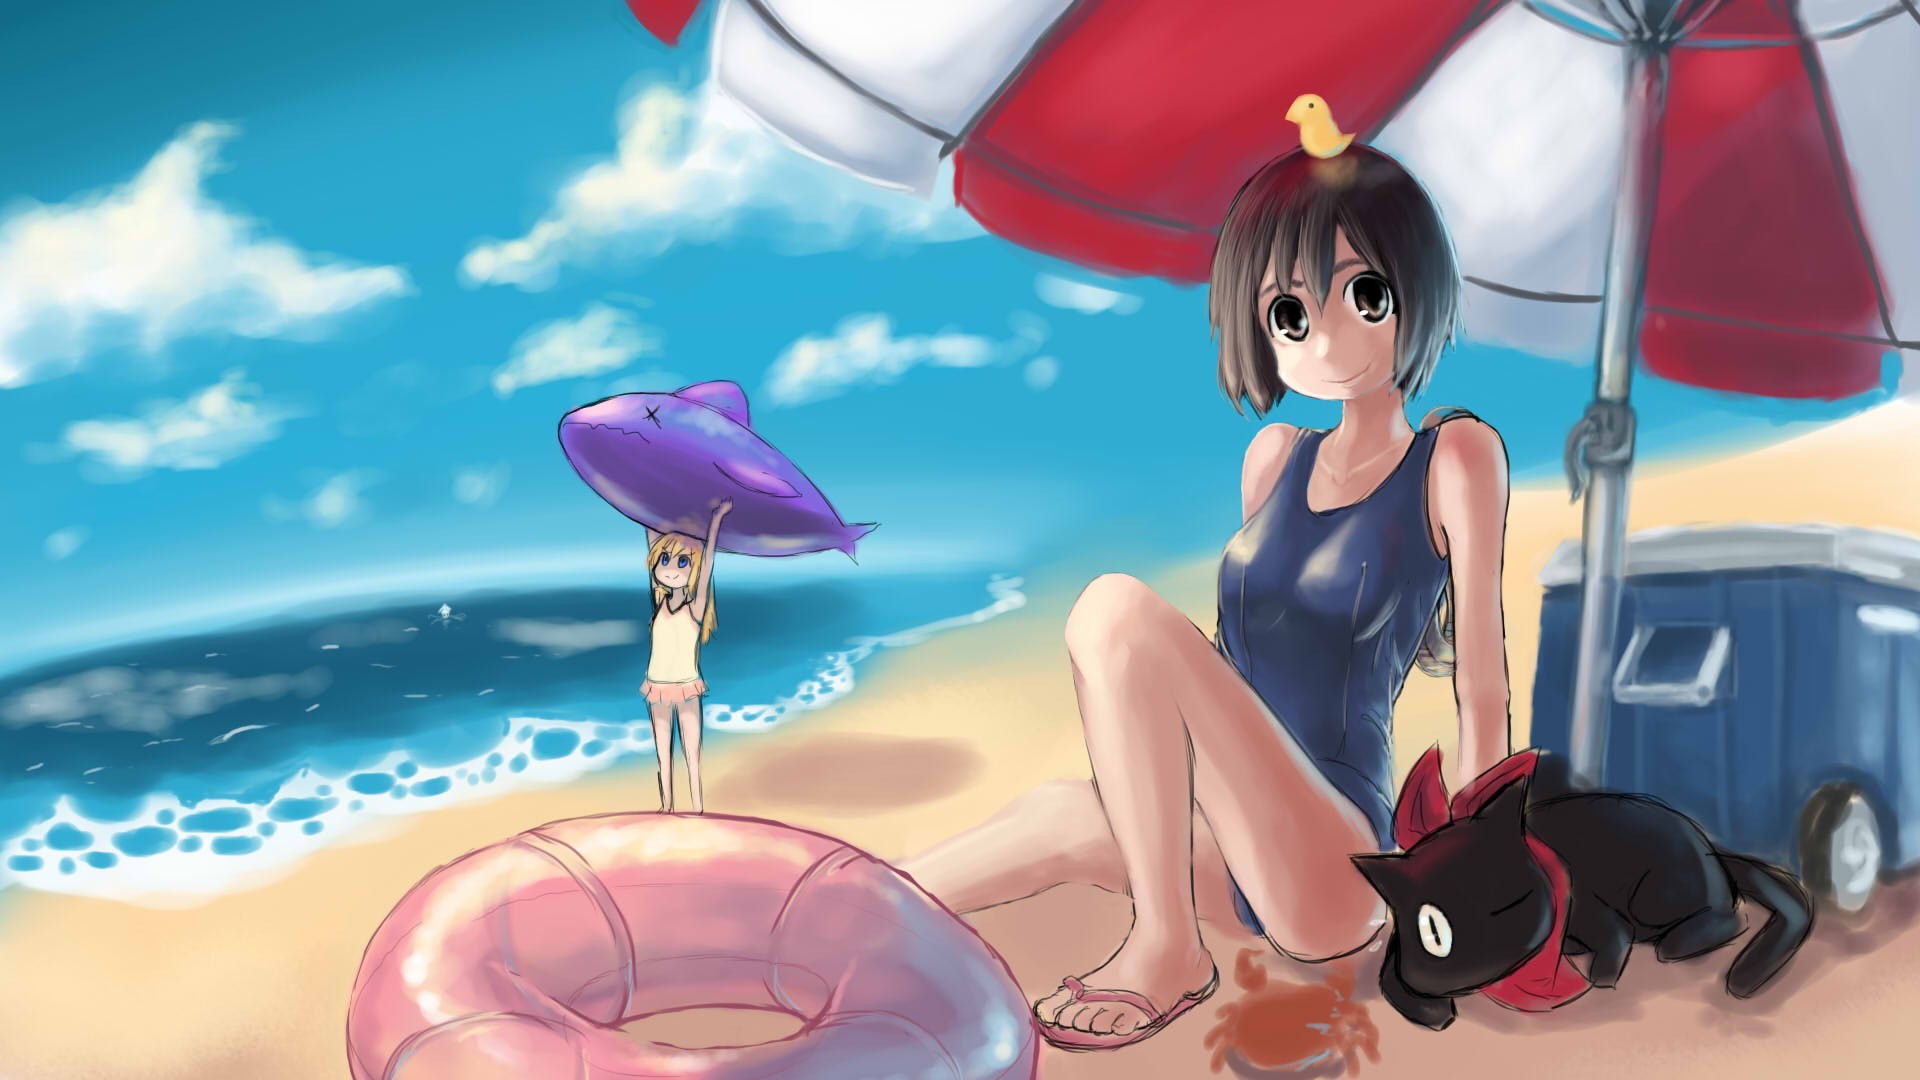 Shinryaku! Ika Musume, anime, swimsuits, beaches - desktop wallpaper